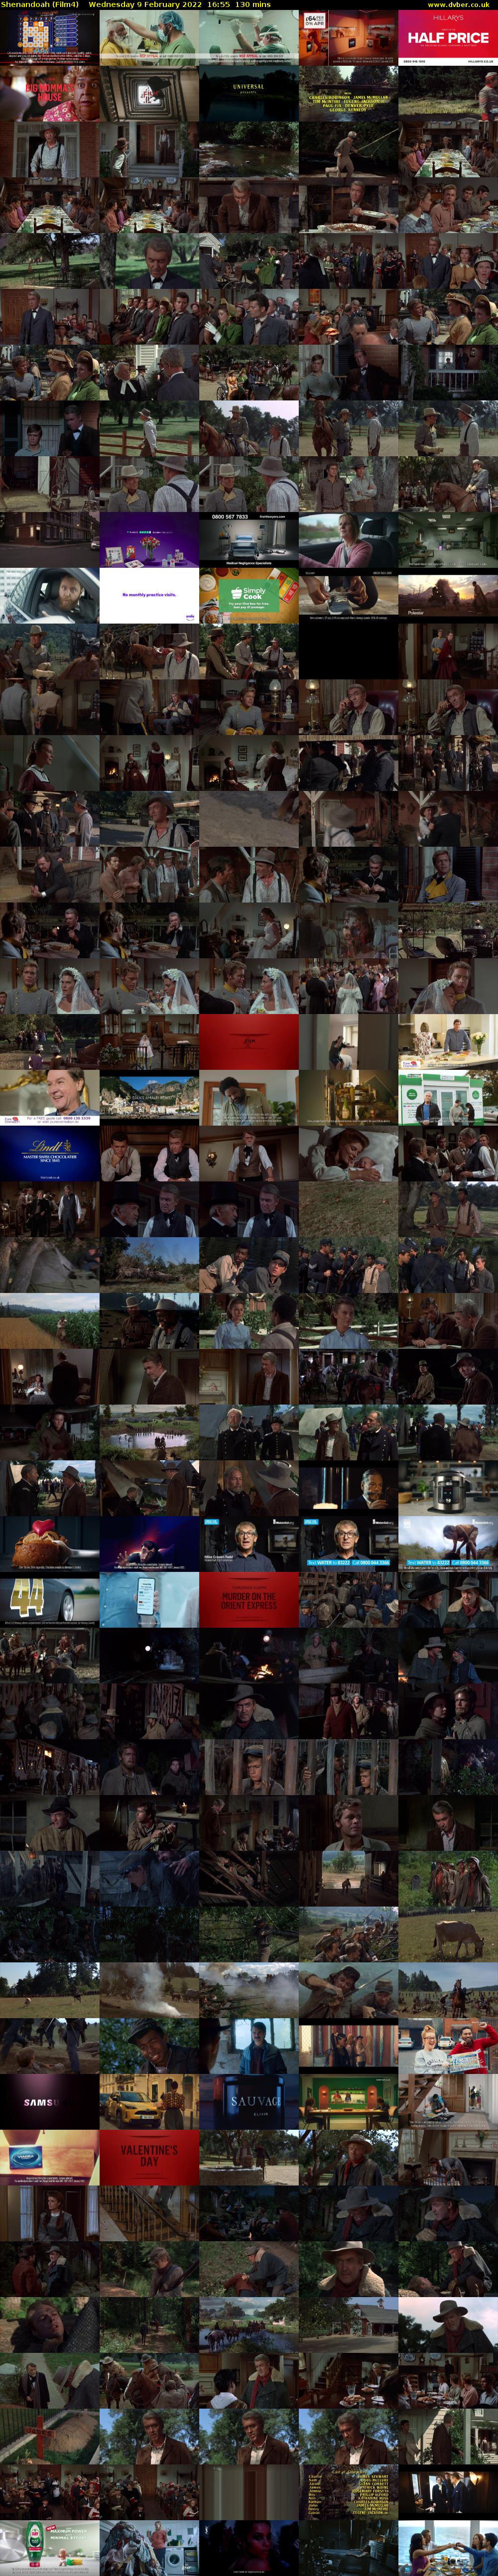 Shenandoah (Film4) Wednesday 9 February 2022 16:55 - 19:05